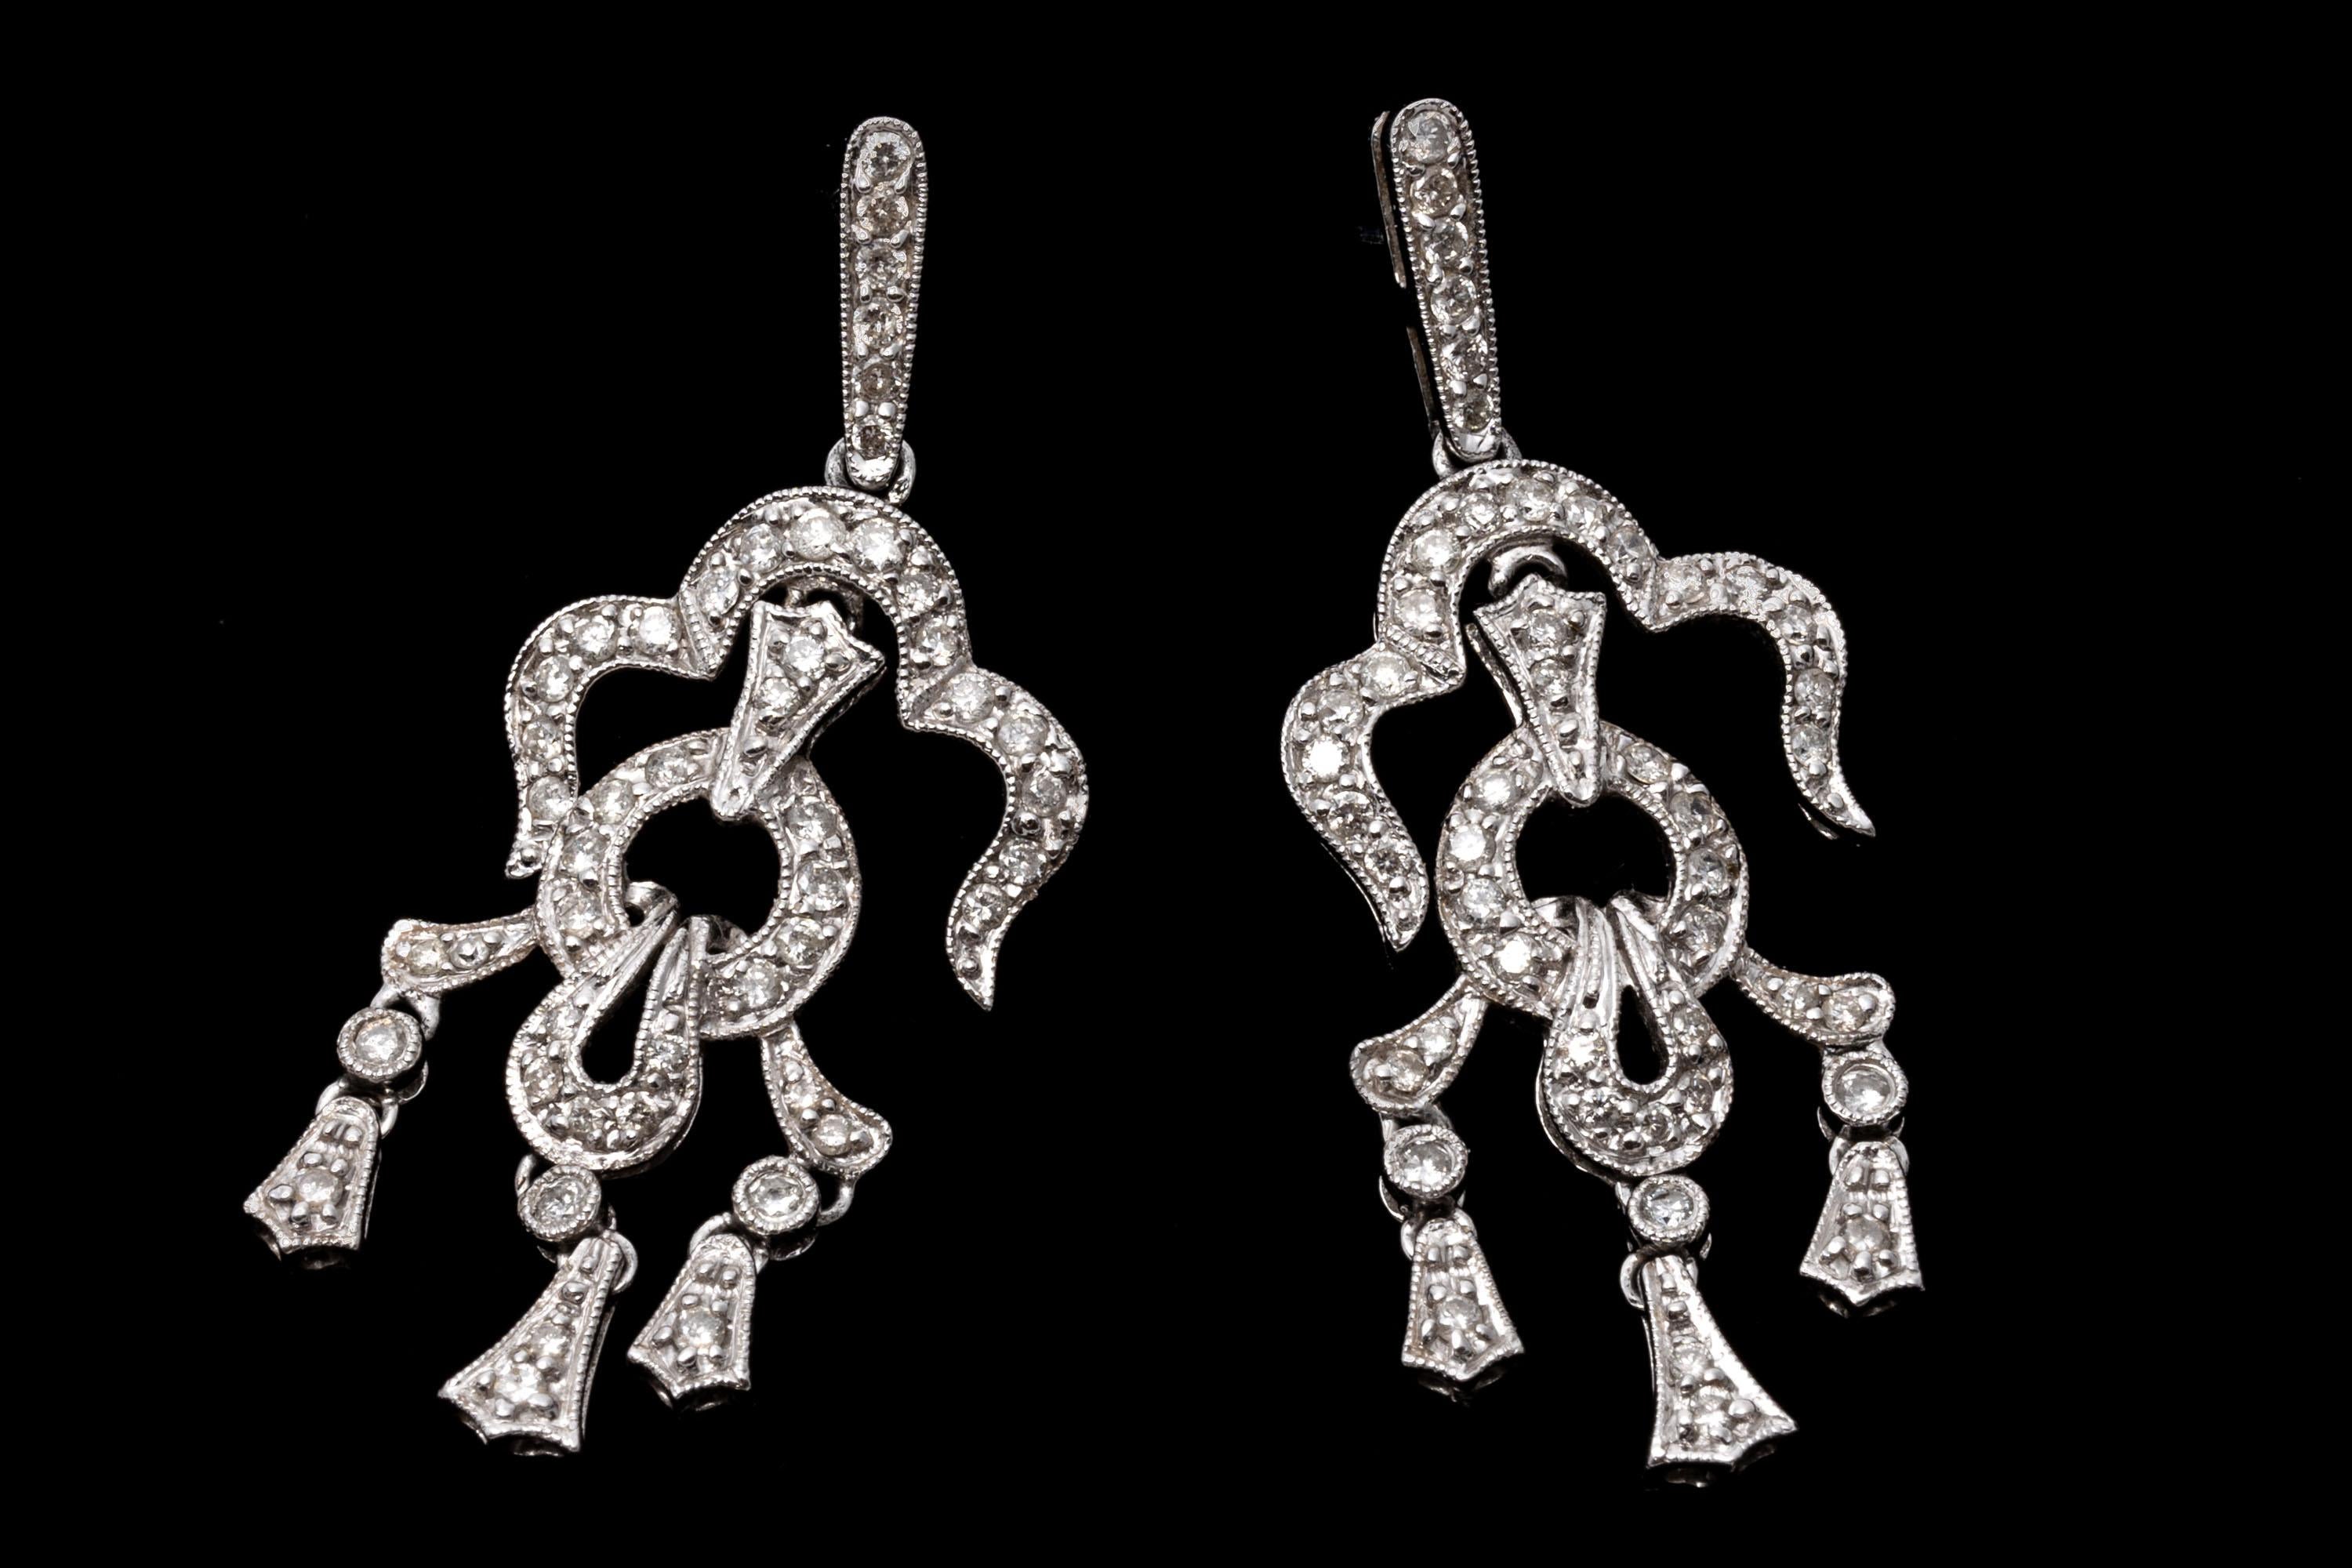 14K White Gold And Diamond Ornate Chandelier Earrings For Sale 2